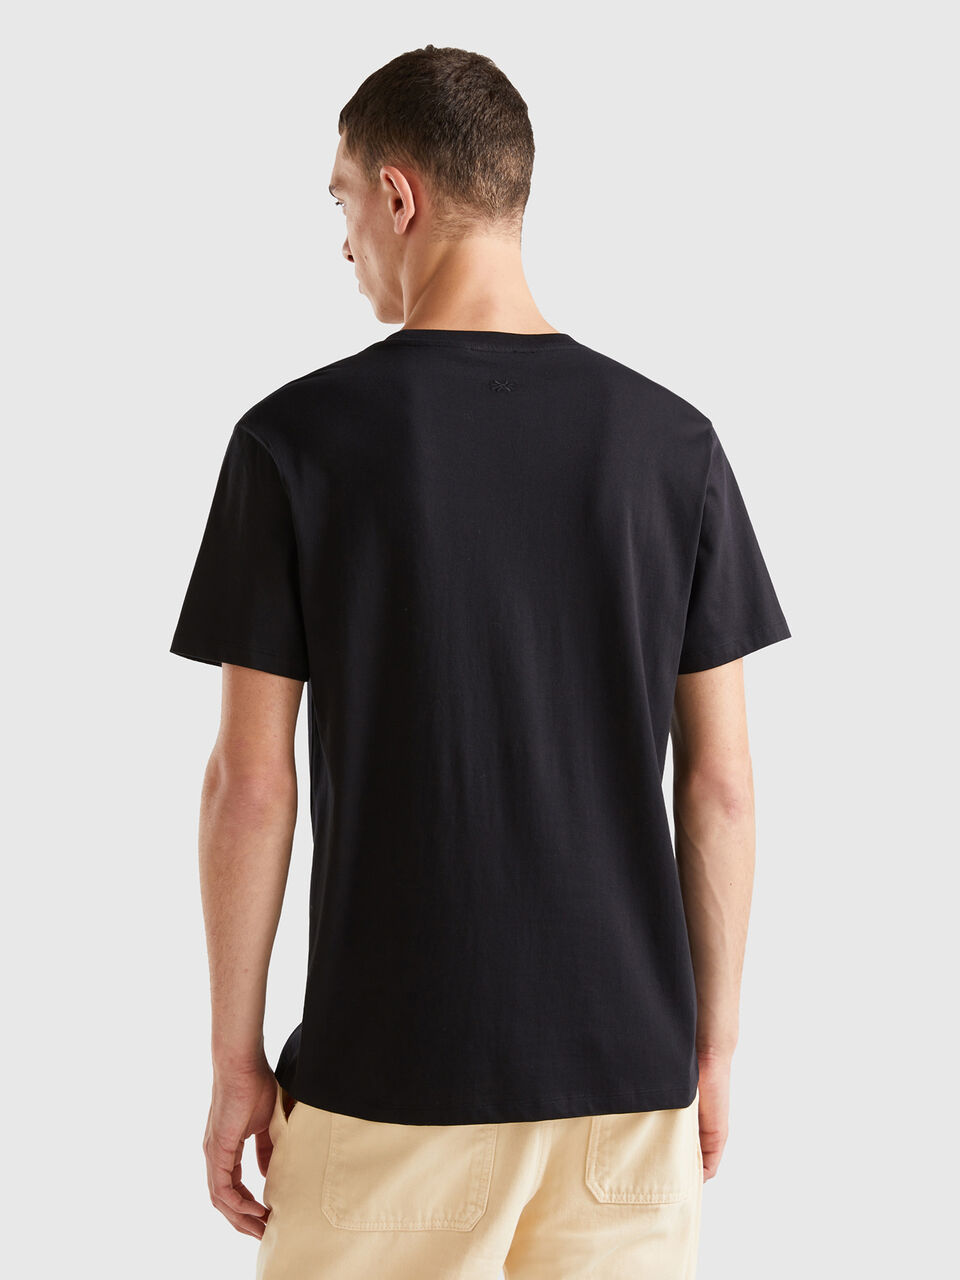 print 100% | cotton Black with Benetton - t-shirt